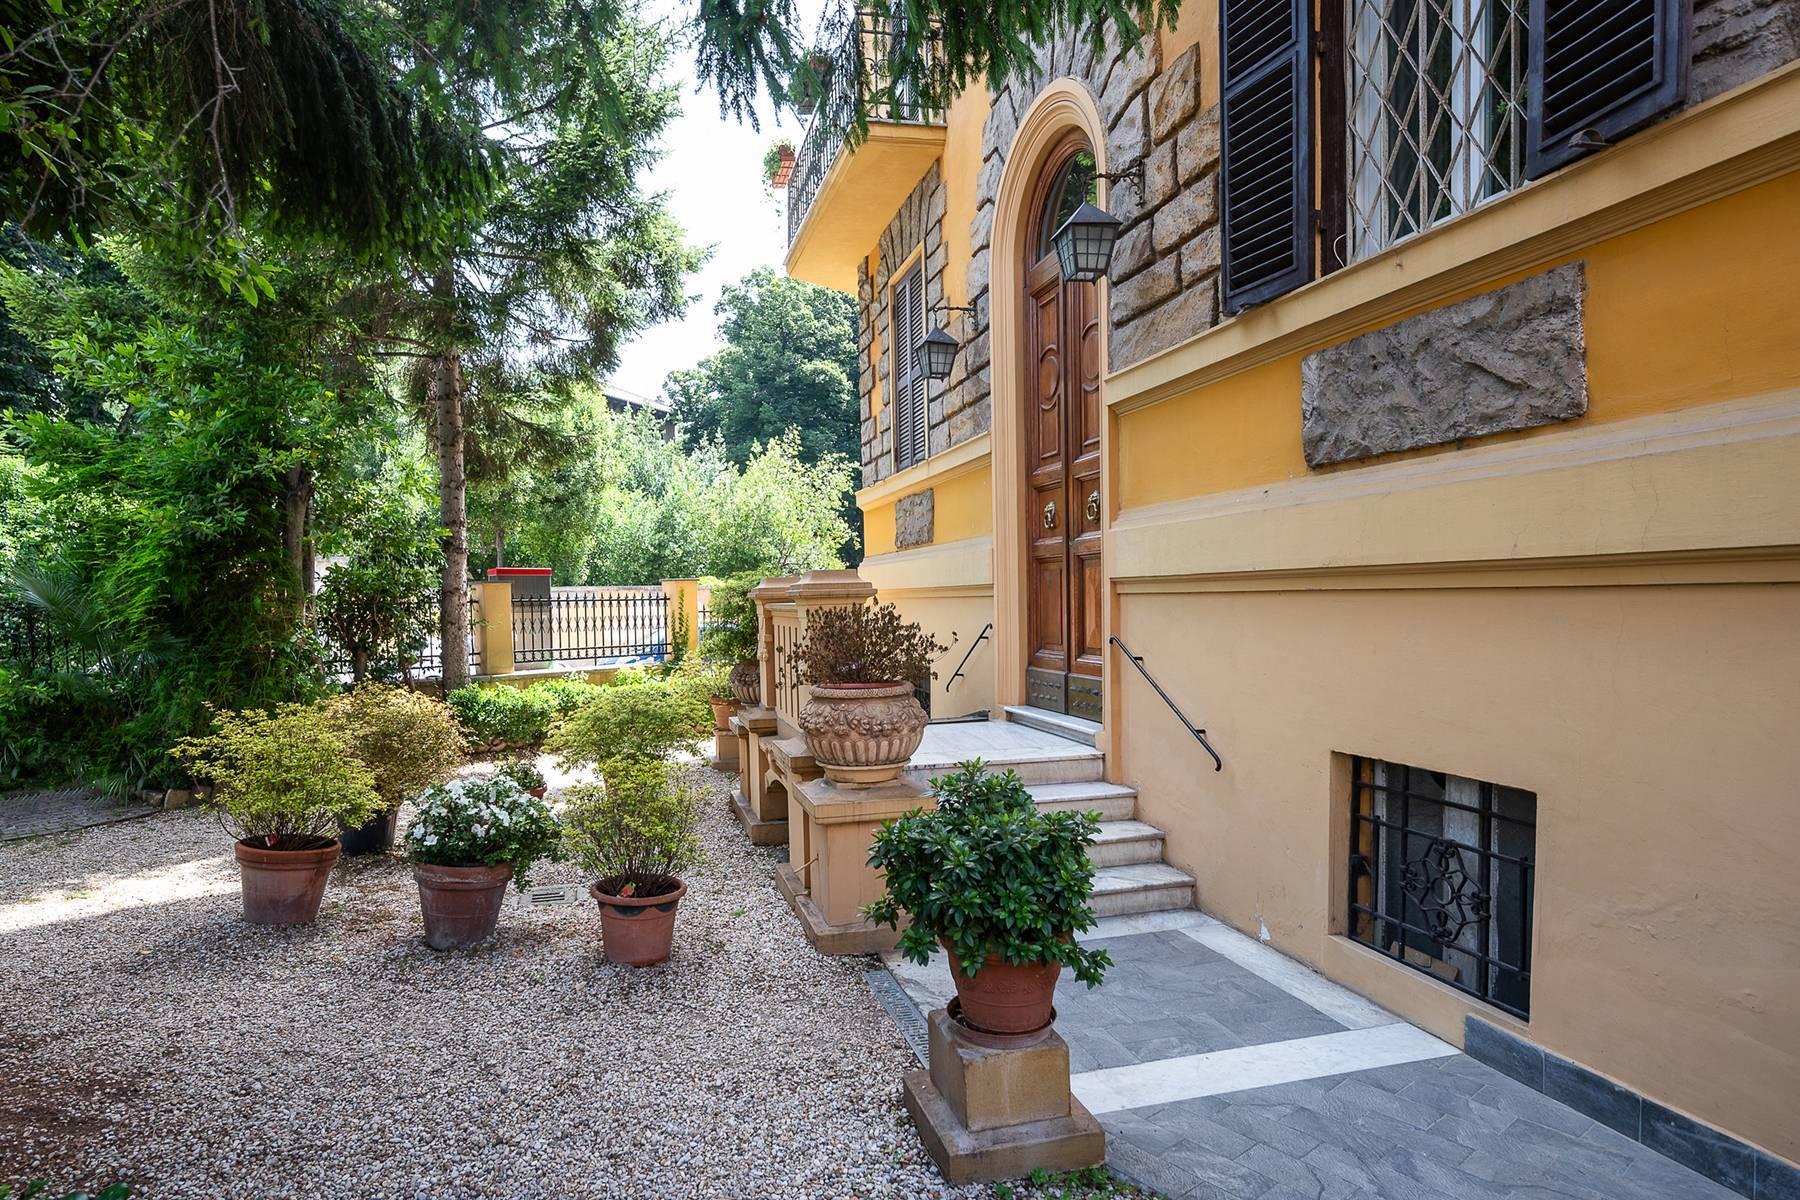 Stunning apartment with spectacular views of Villa Torlonia - 1